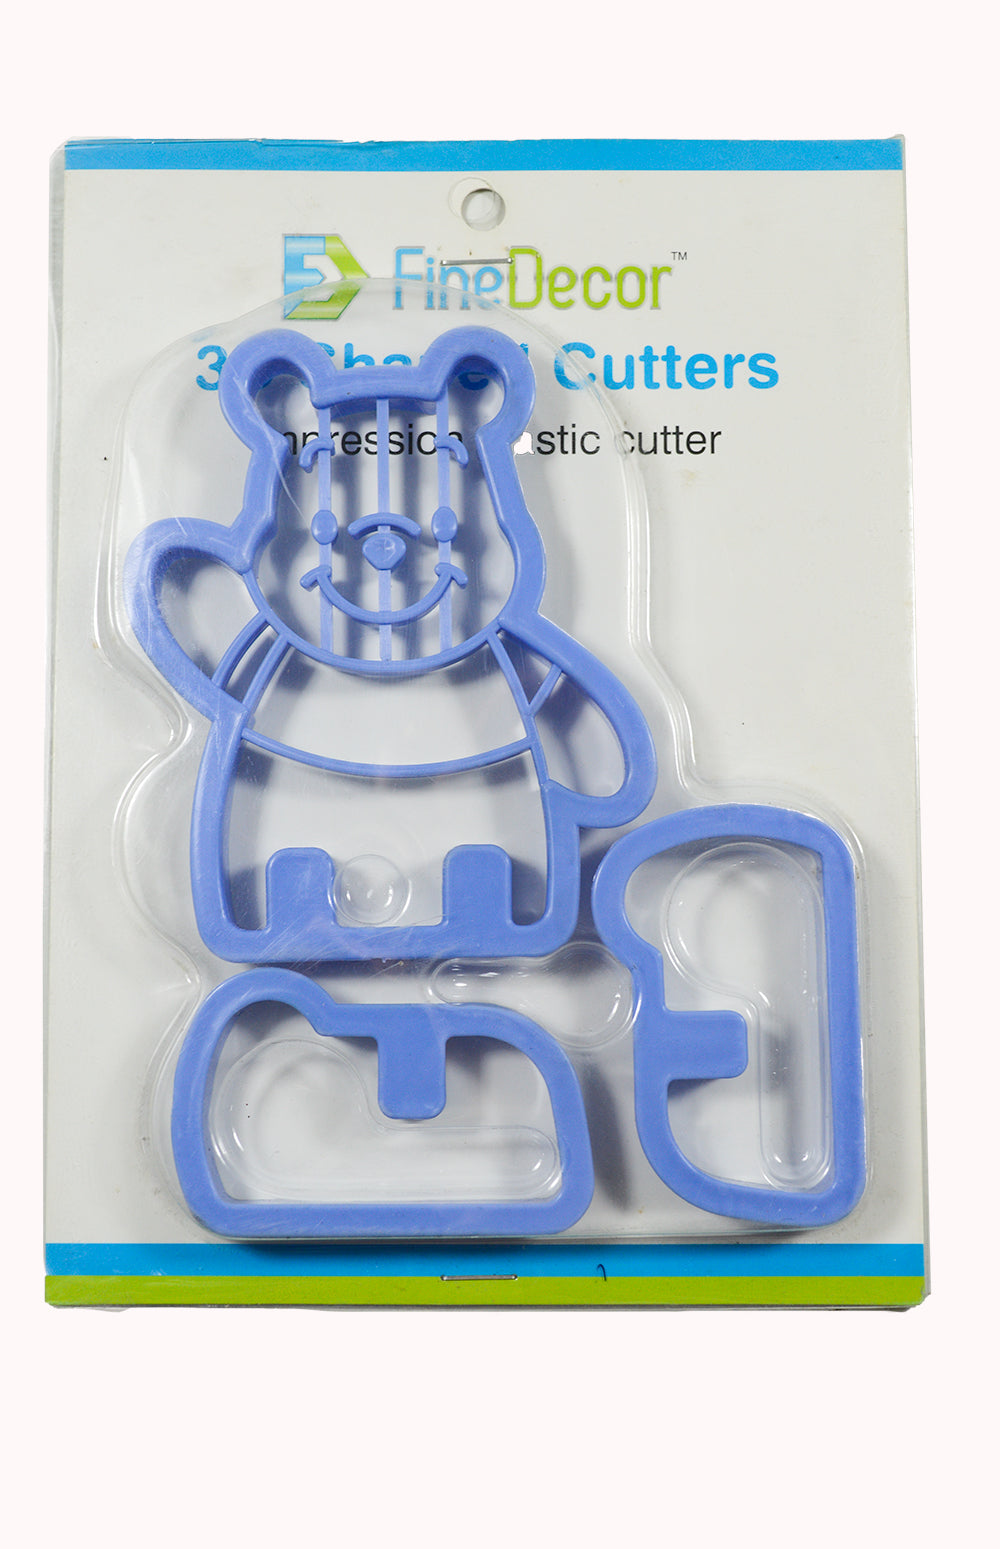 Finedecor 3D Shaped Cutters - FD - 2479